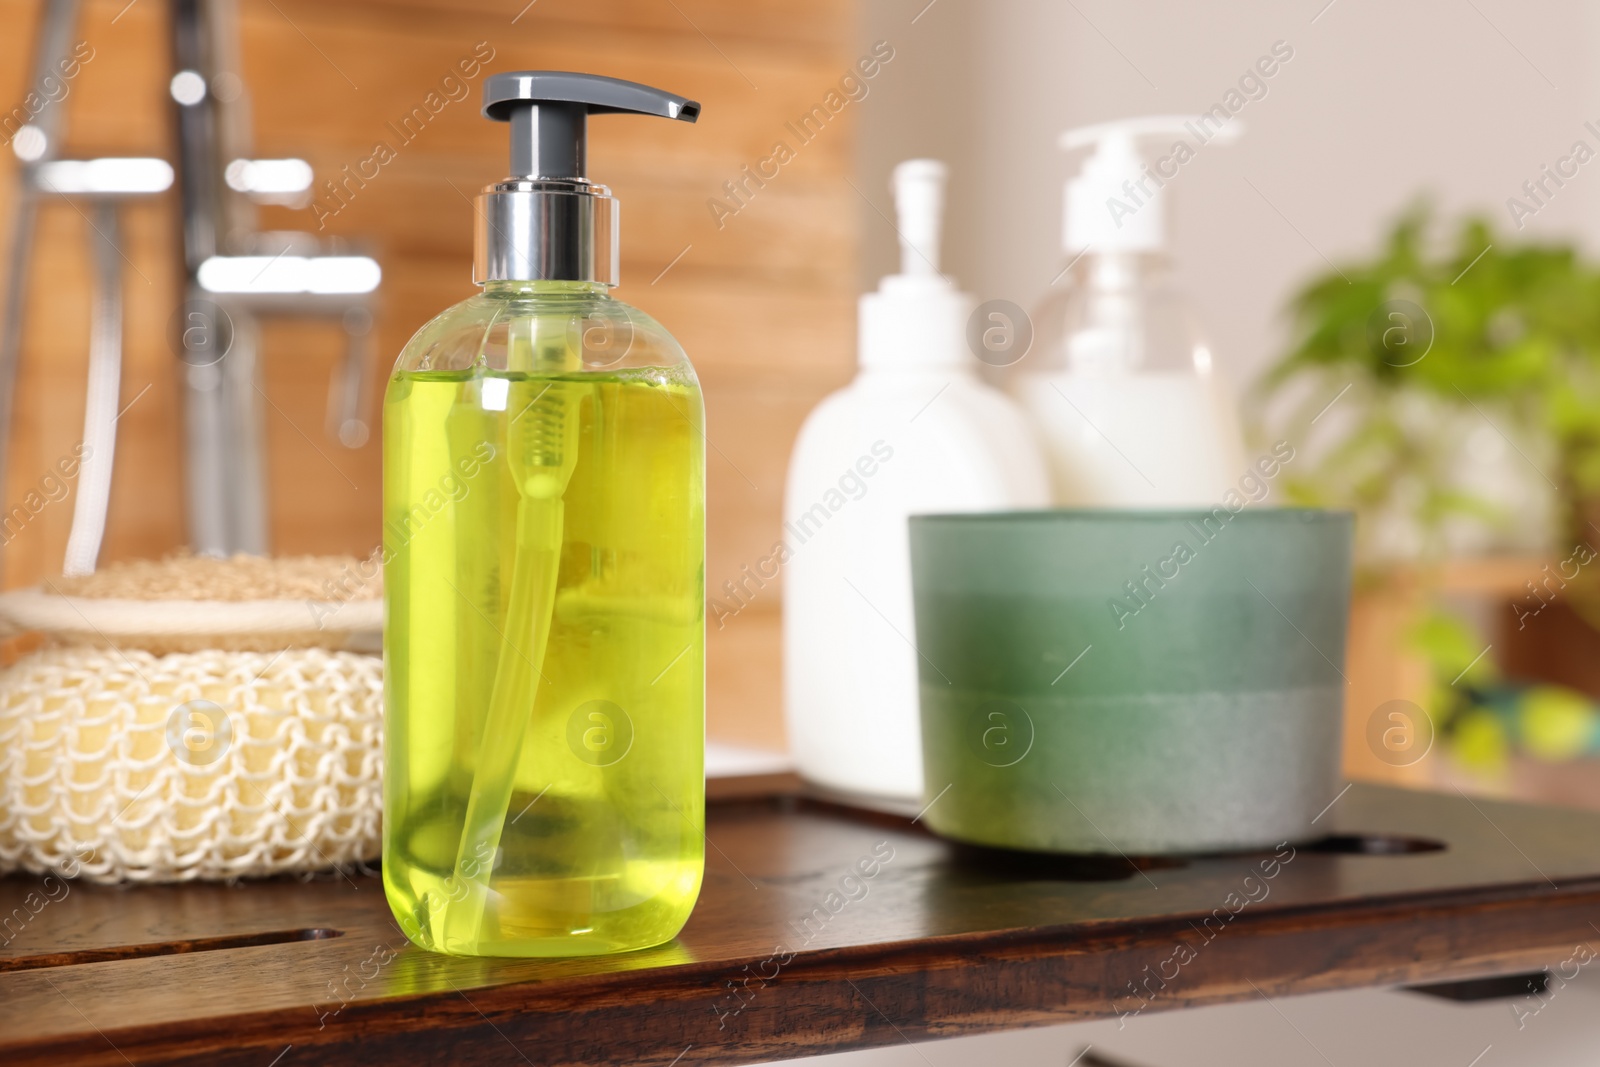 Photo of Dispenser of liquid soap on wooden board in bathroom